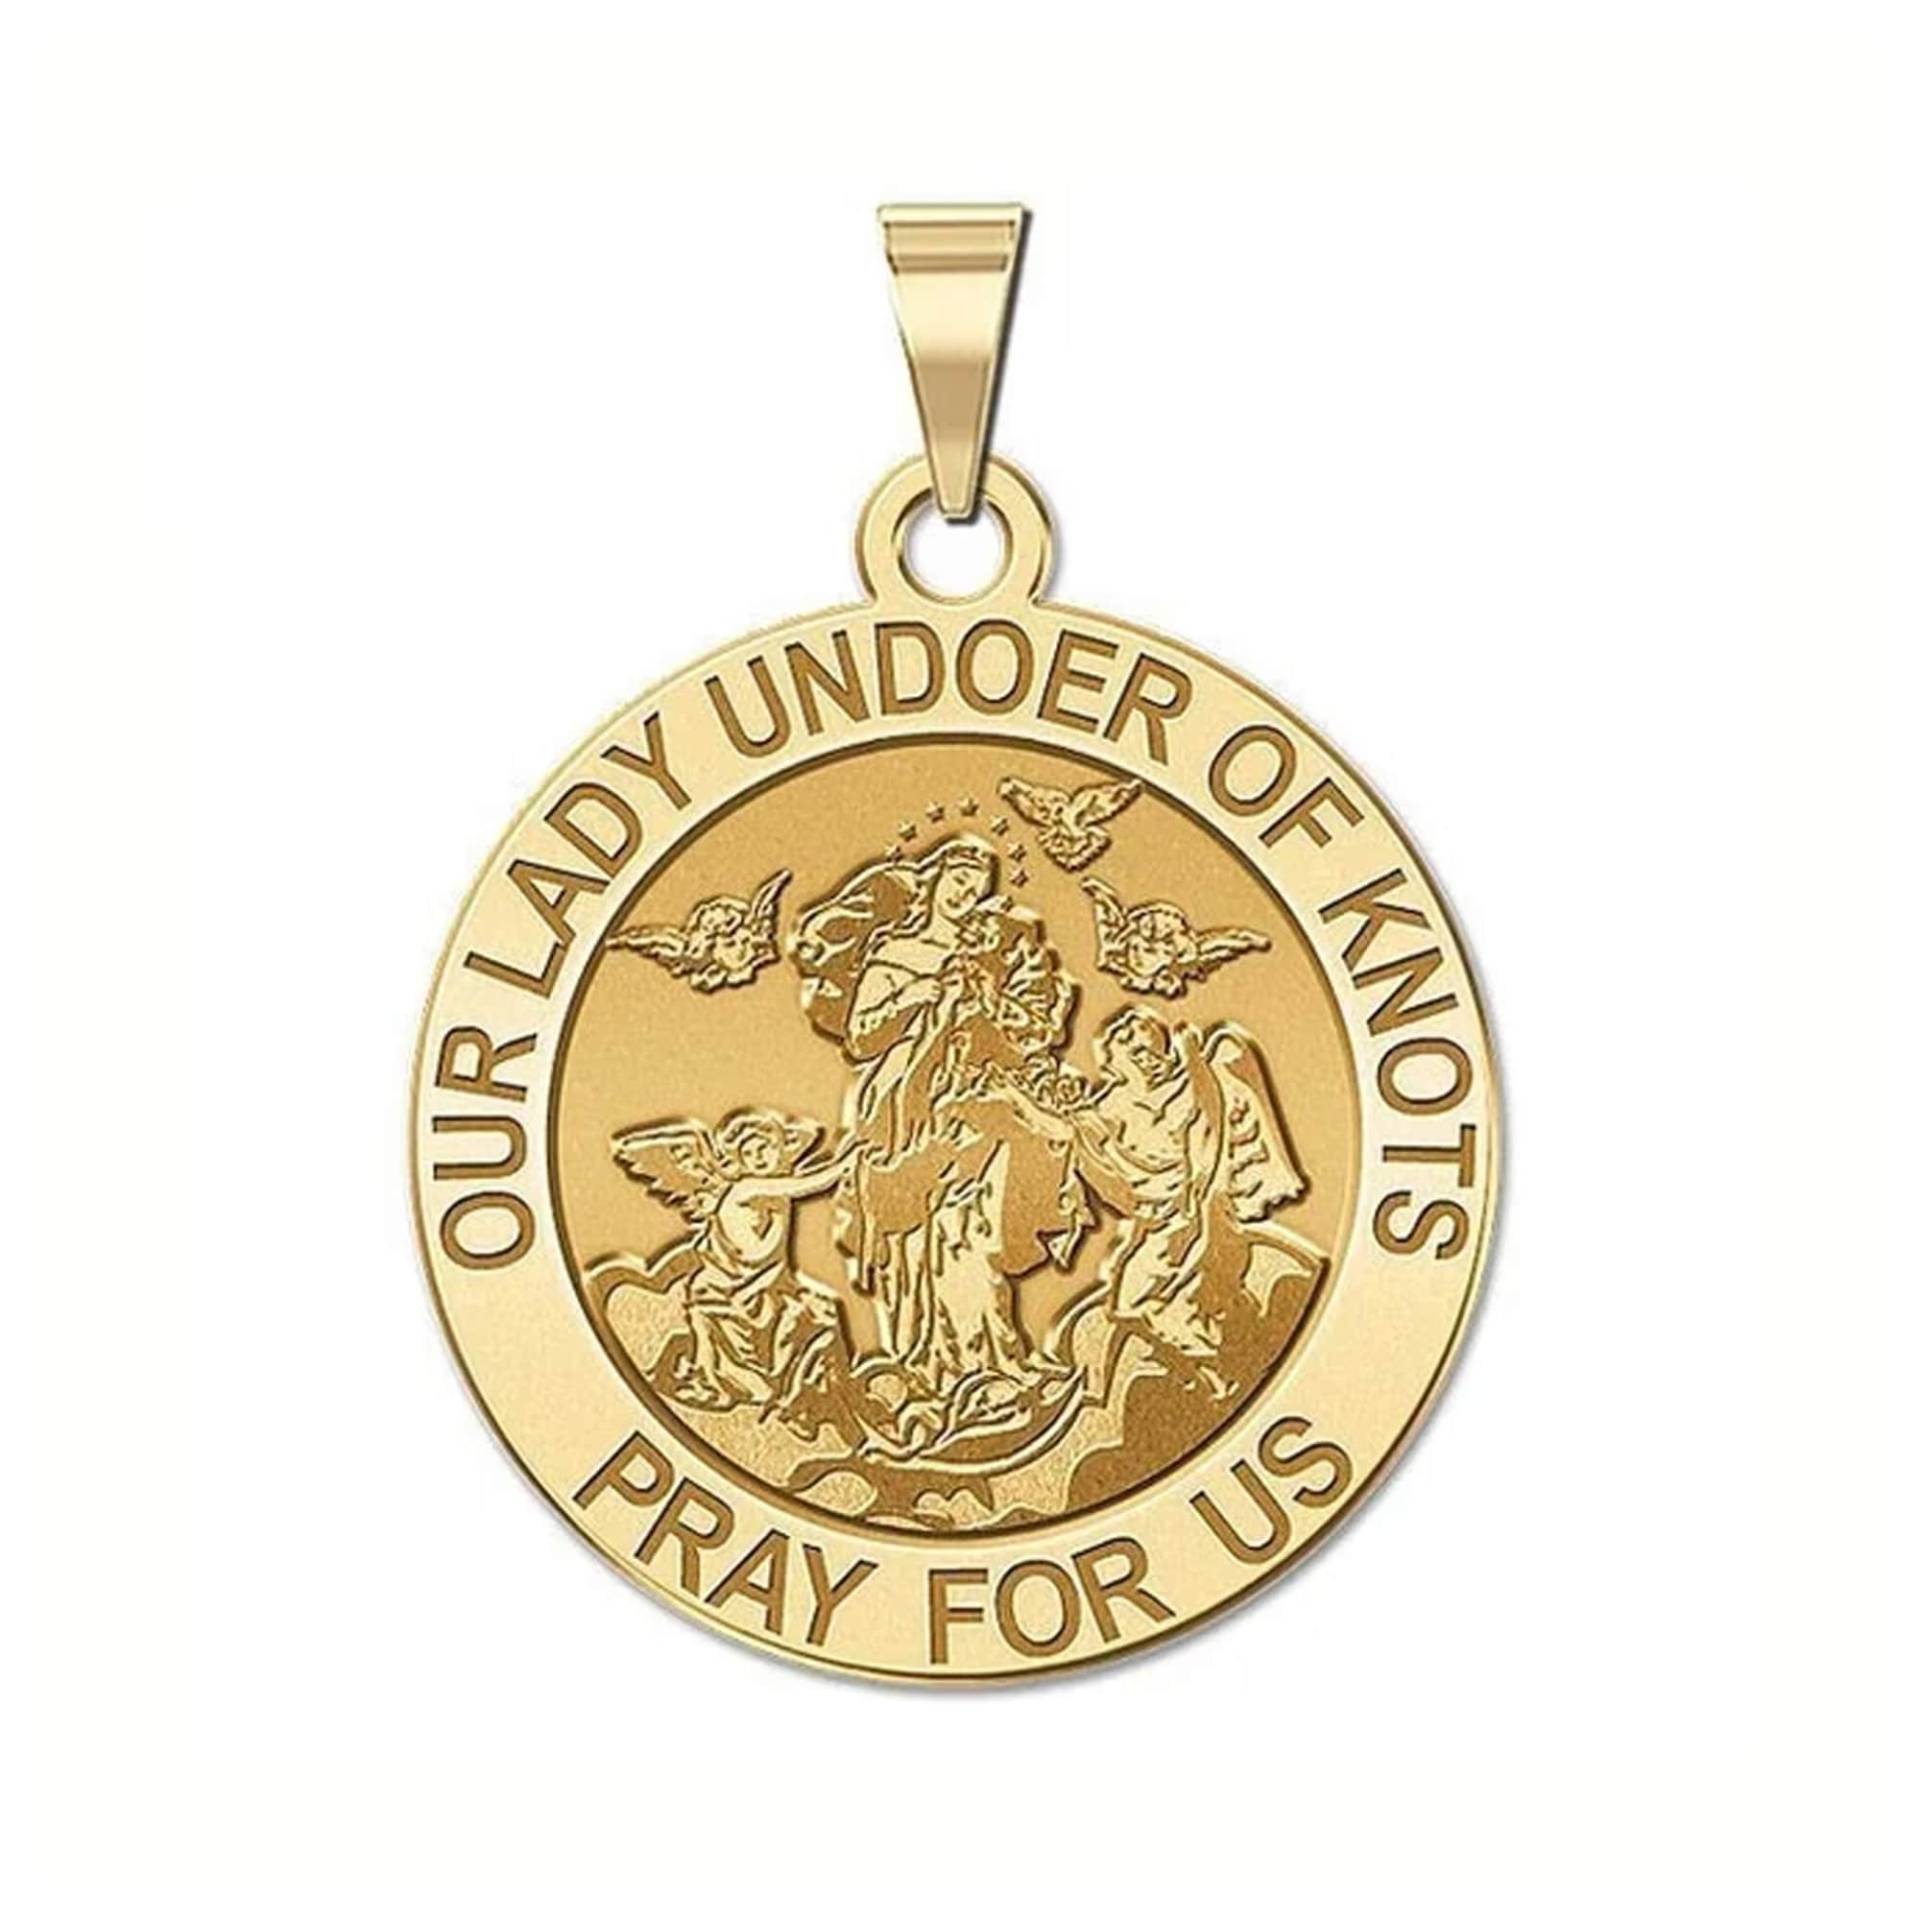 Our Lady Undoer Of Knots Religiöse Medaille von CustomizeTheCharms